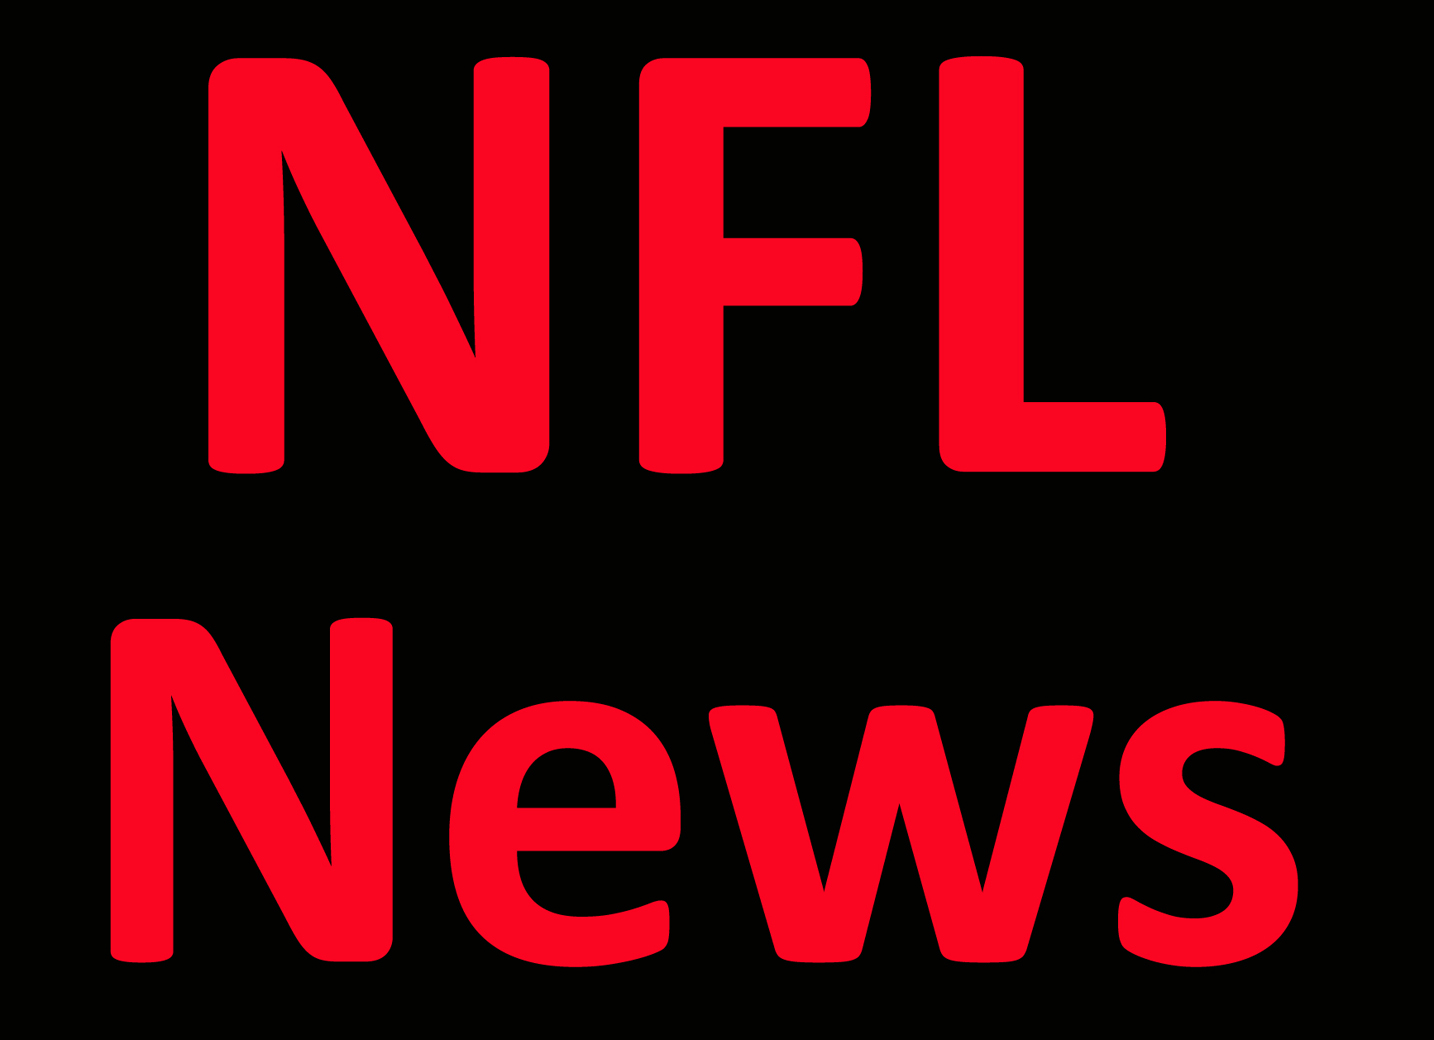 NFL News: Pro Football Hall of Famer Trippi dies at age 100 Per Report